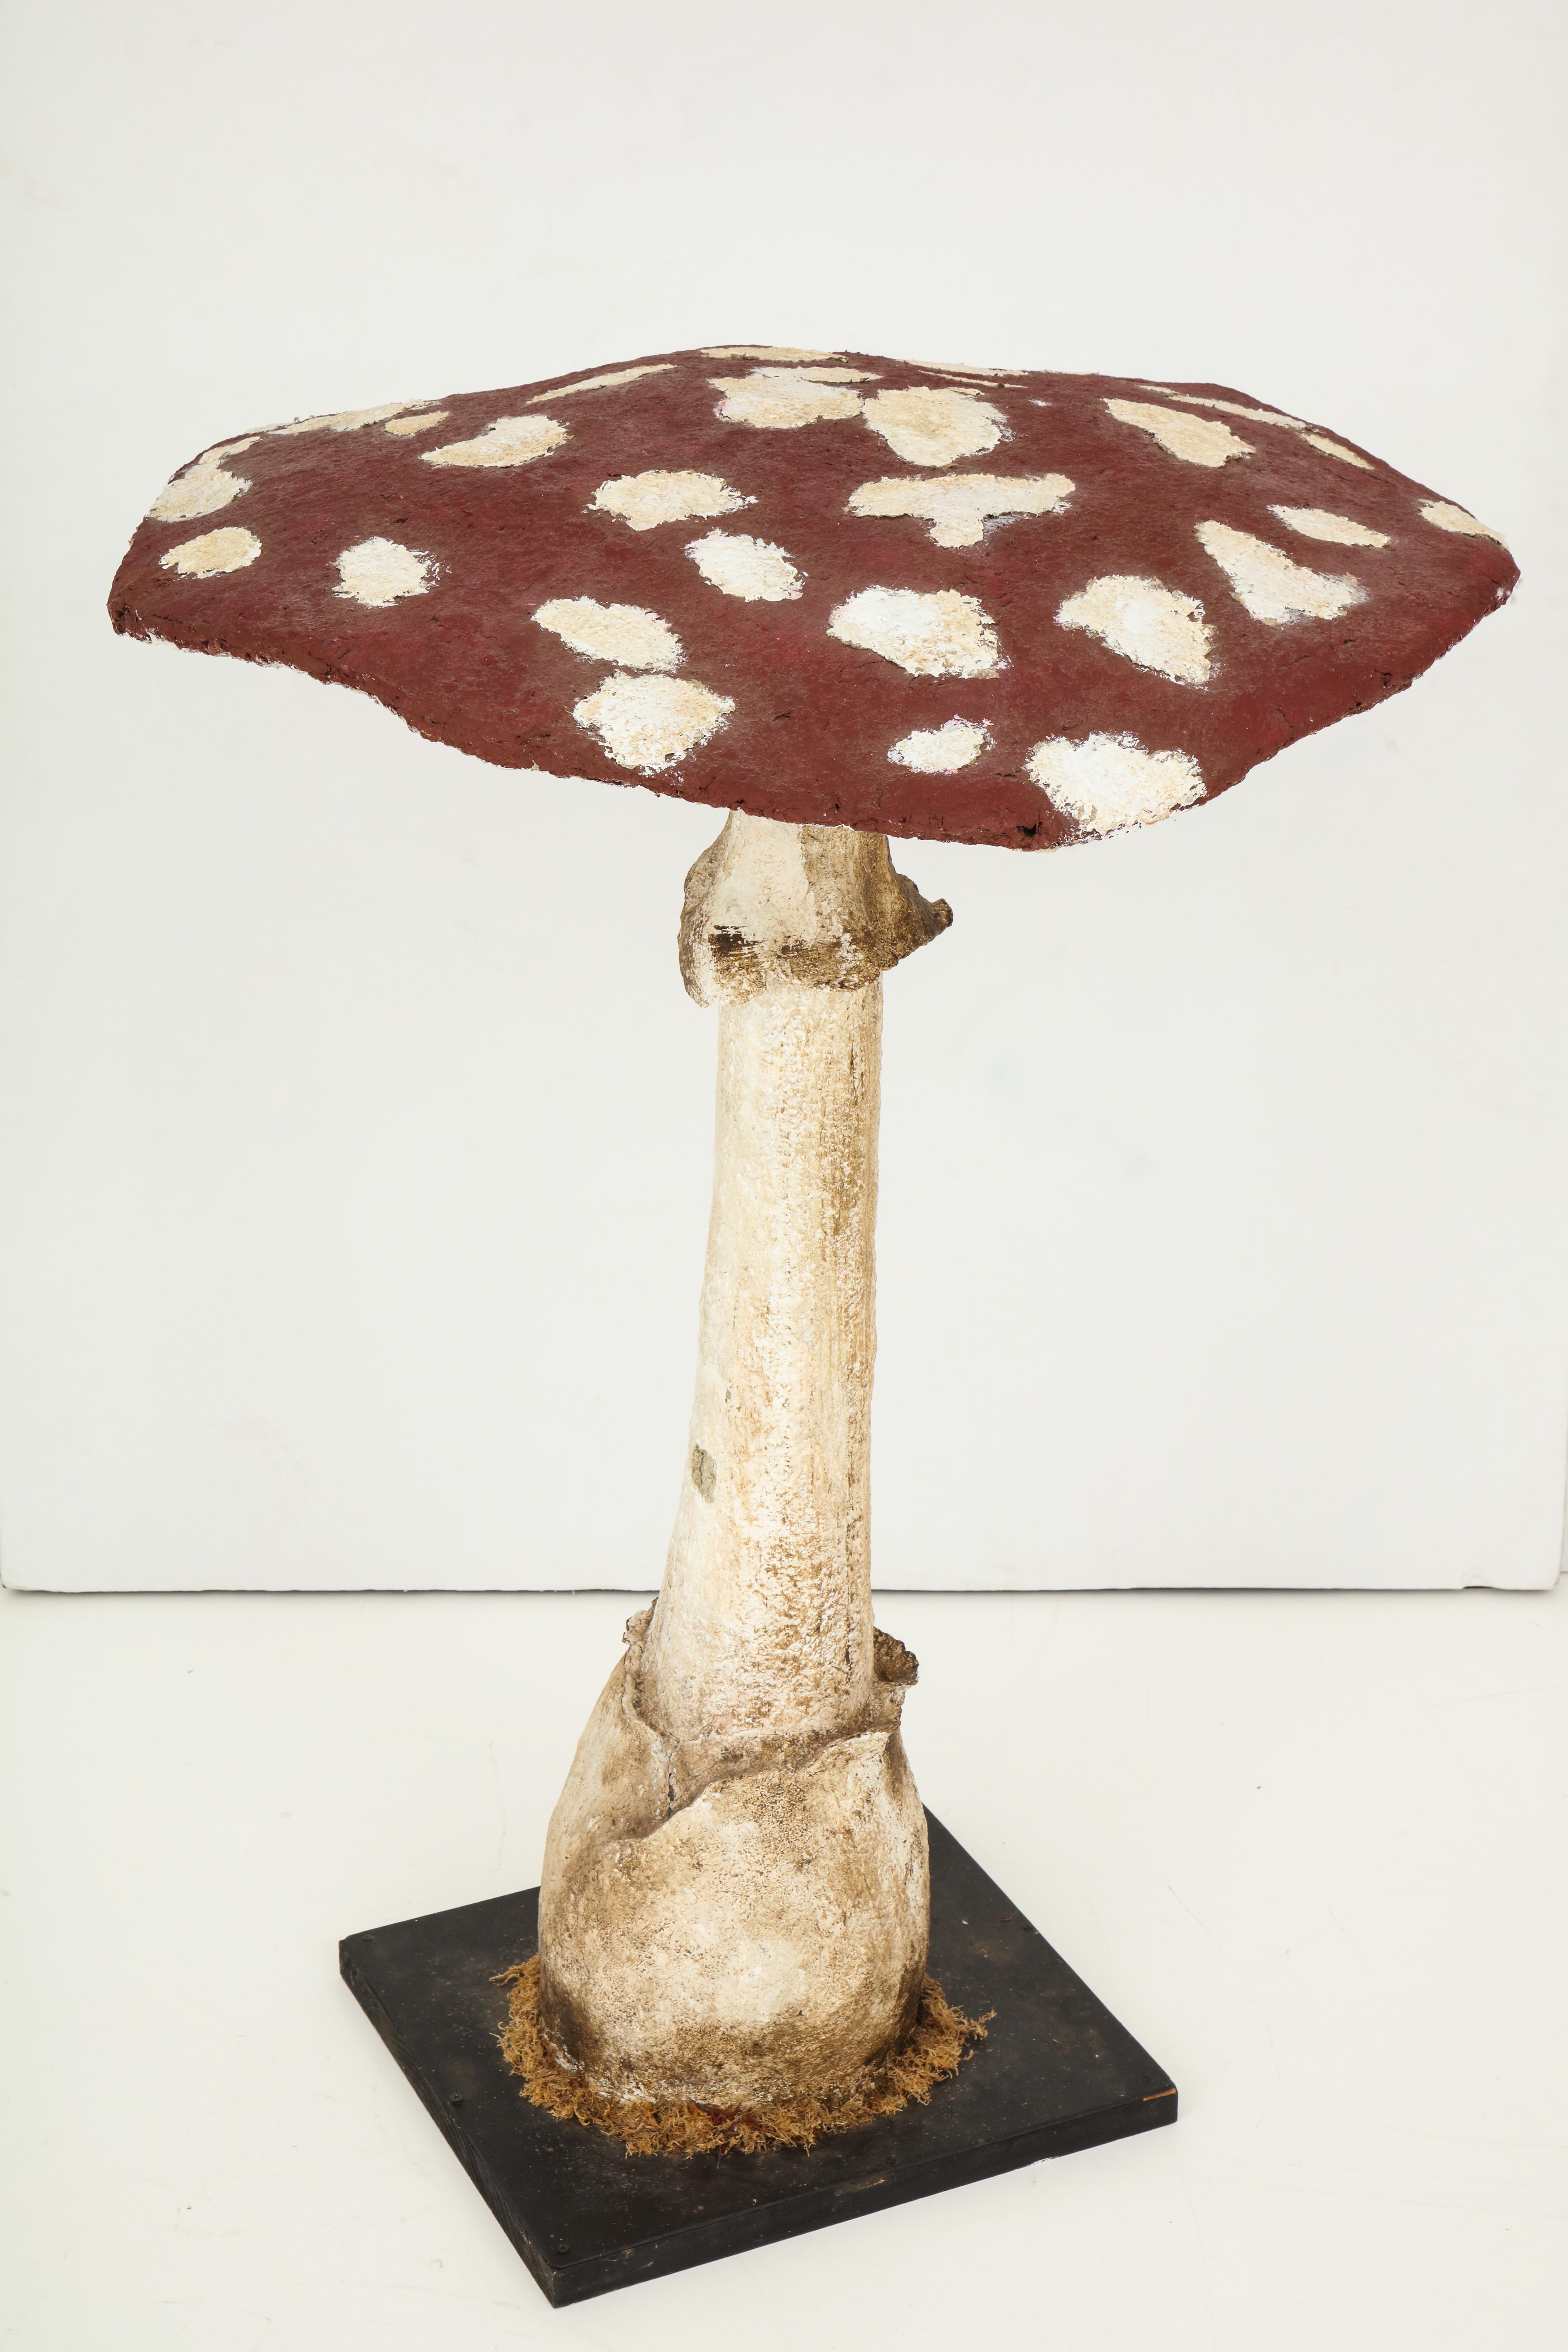 paper mache mushroom ornaments